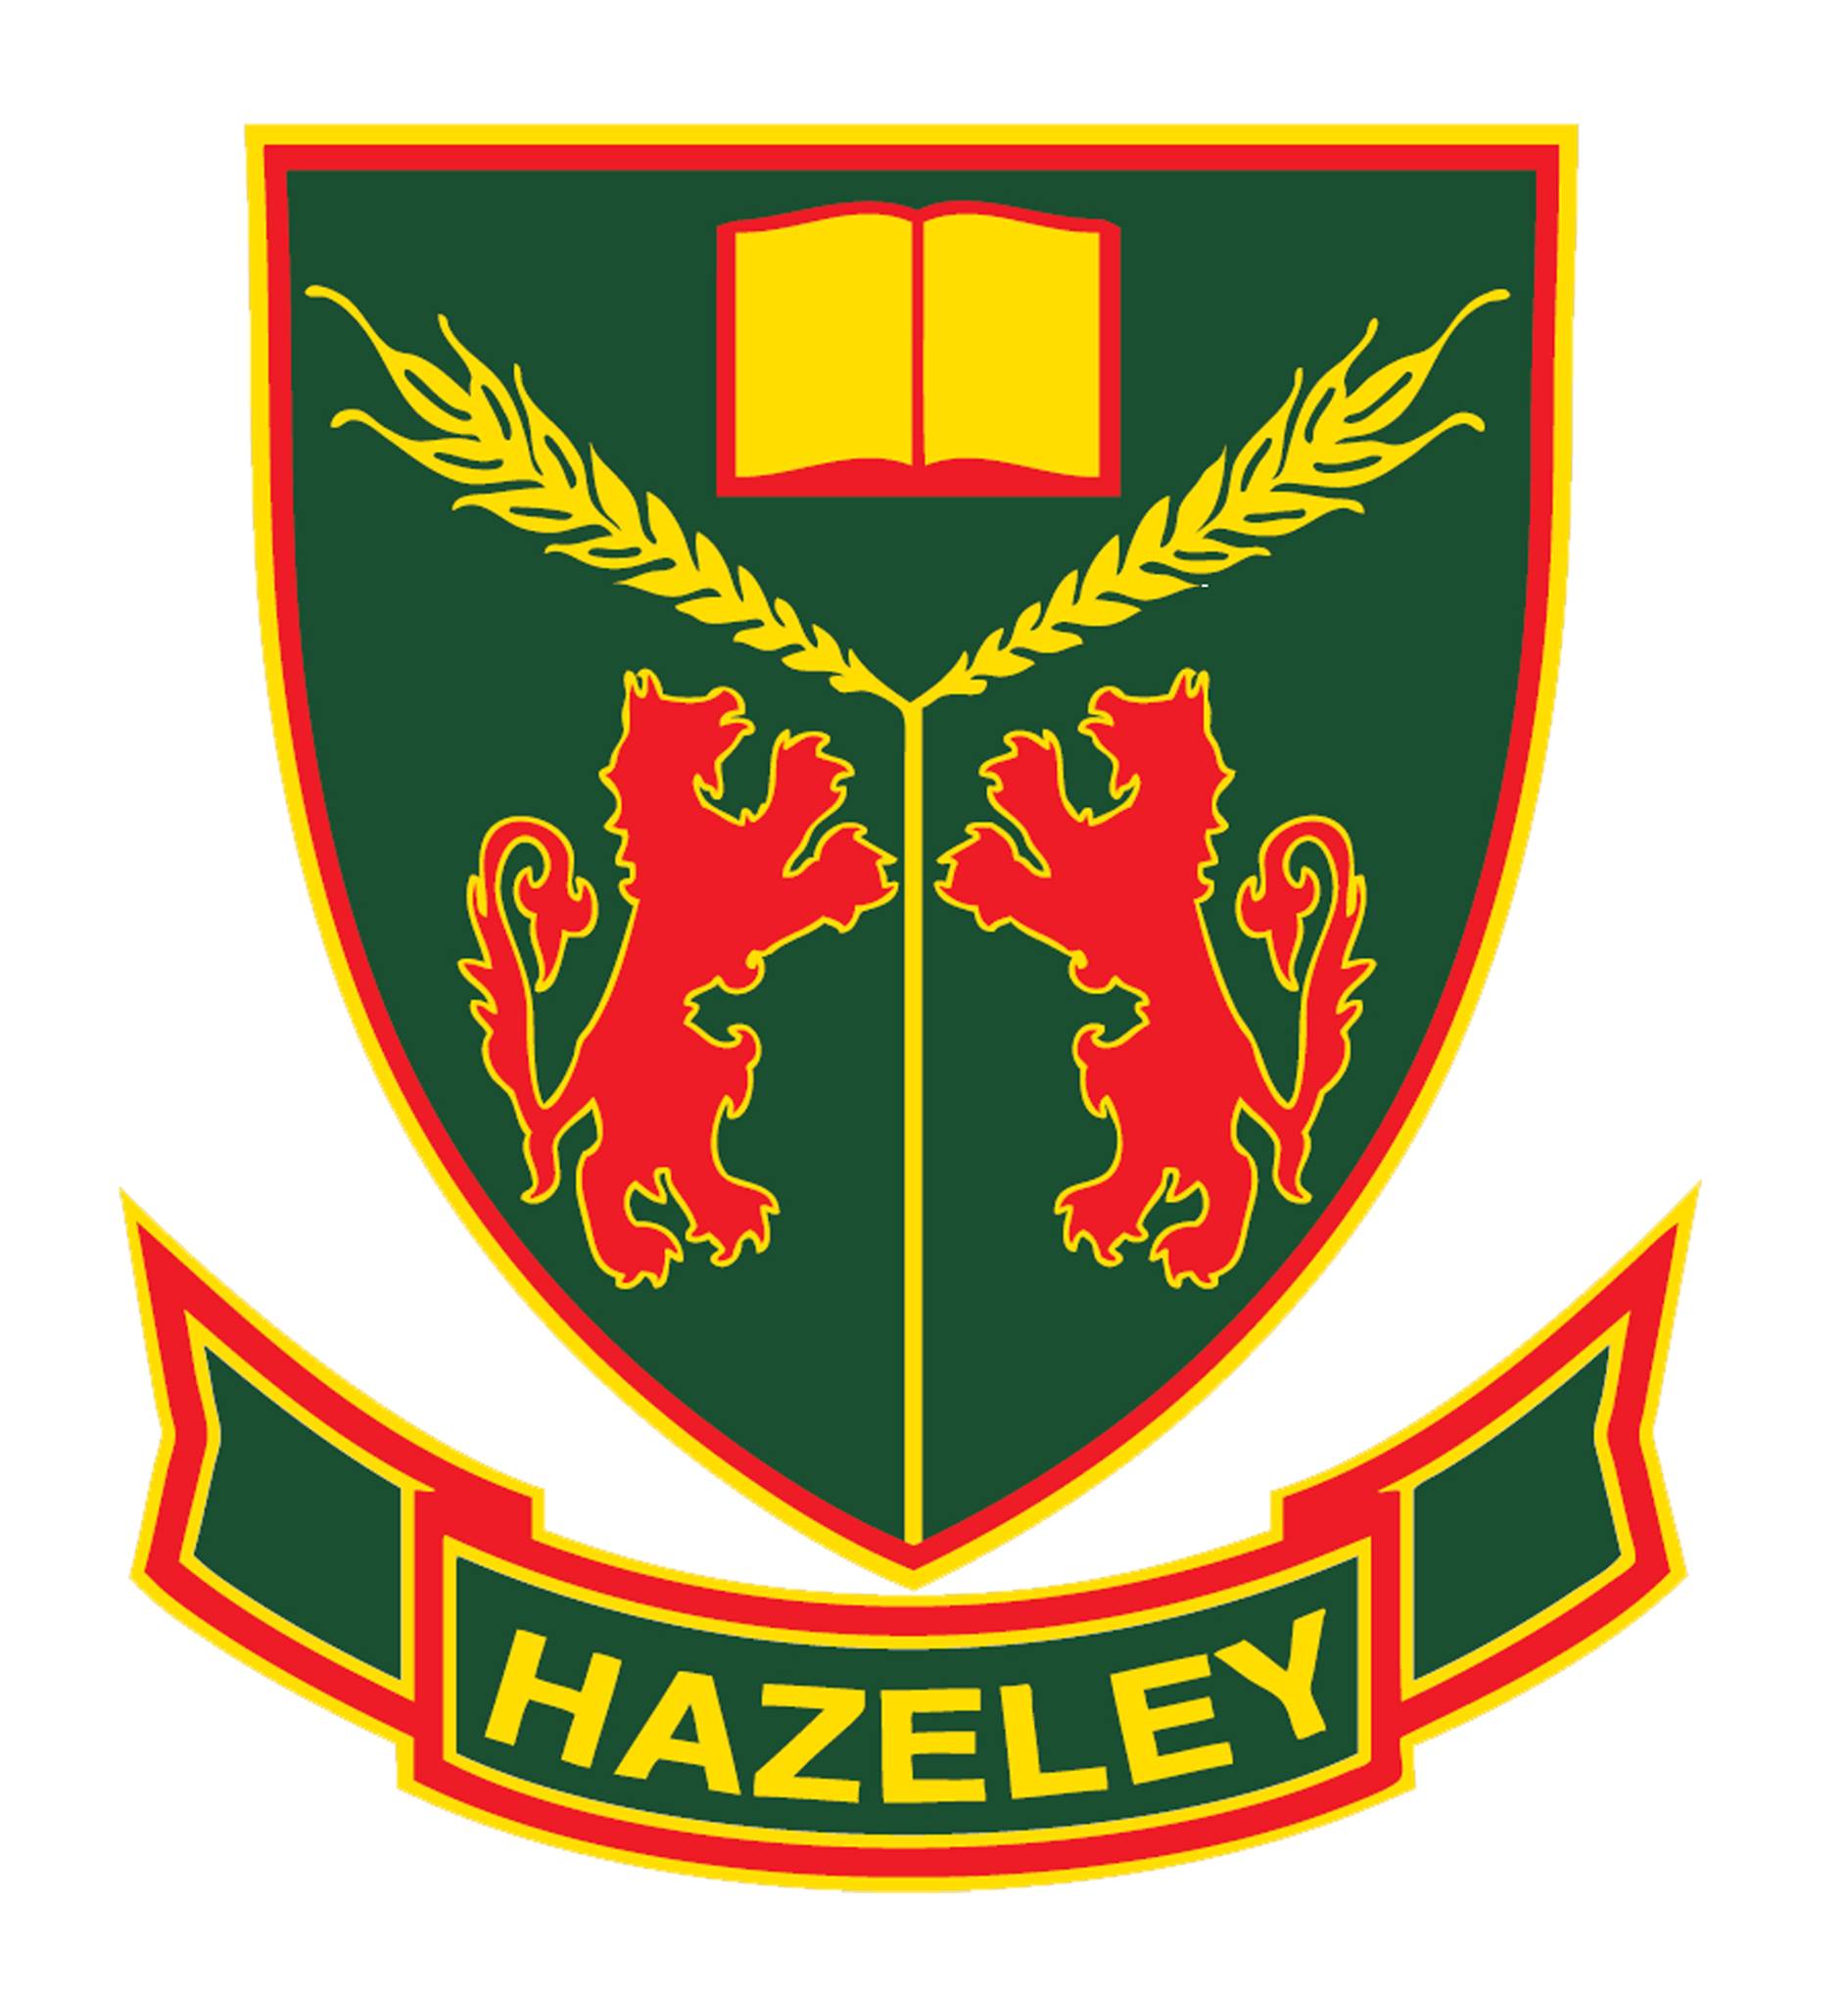 The Hazeley Academy校徽